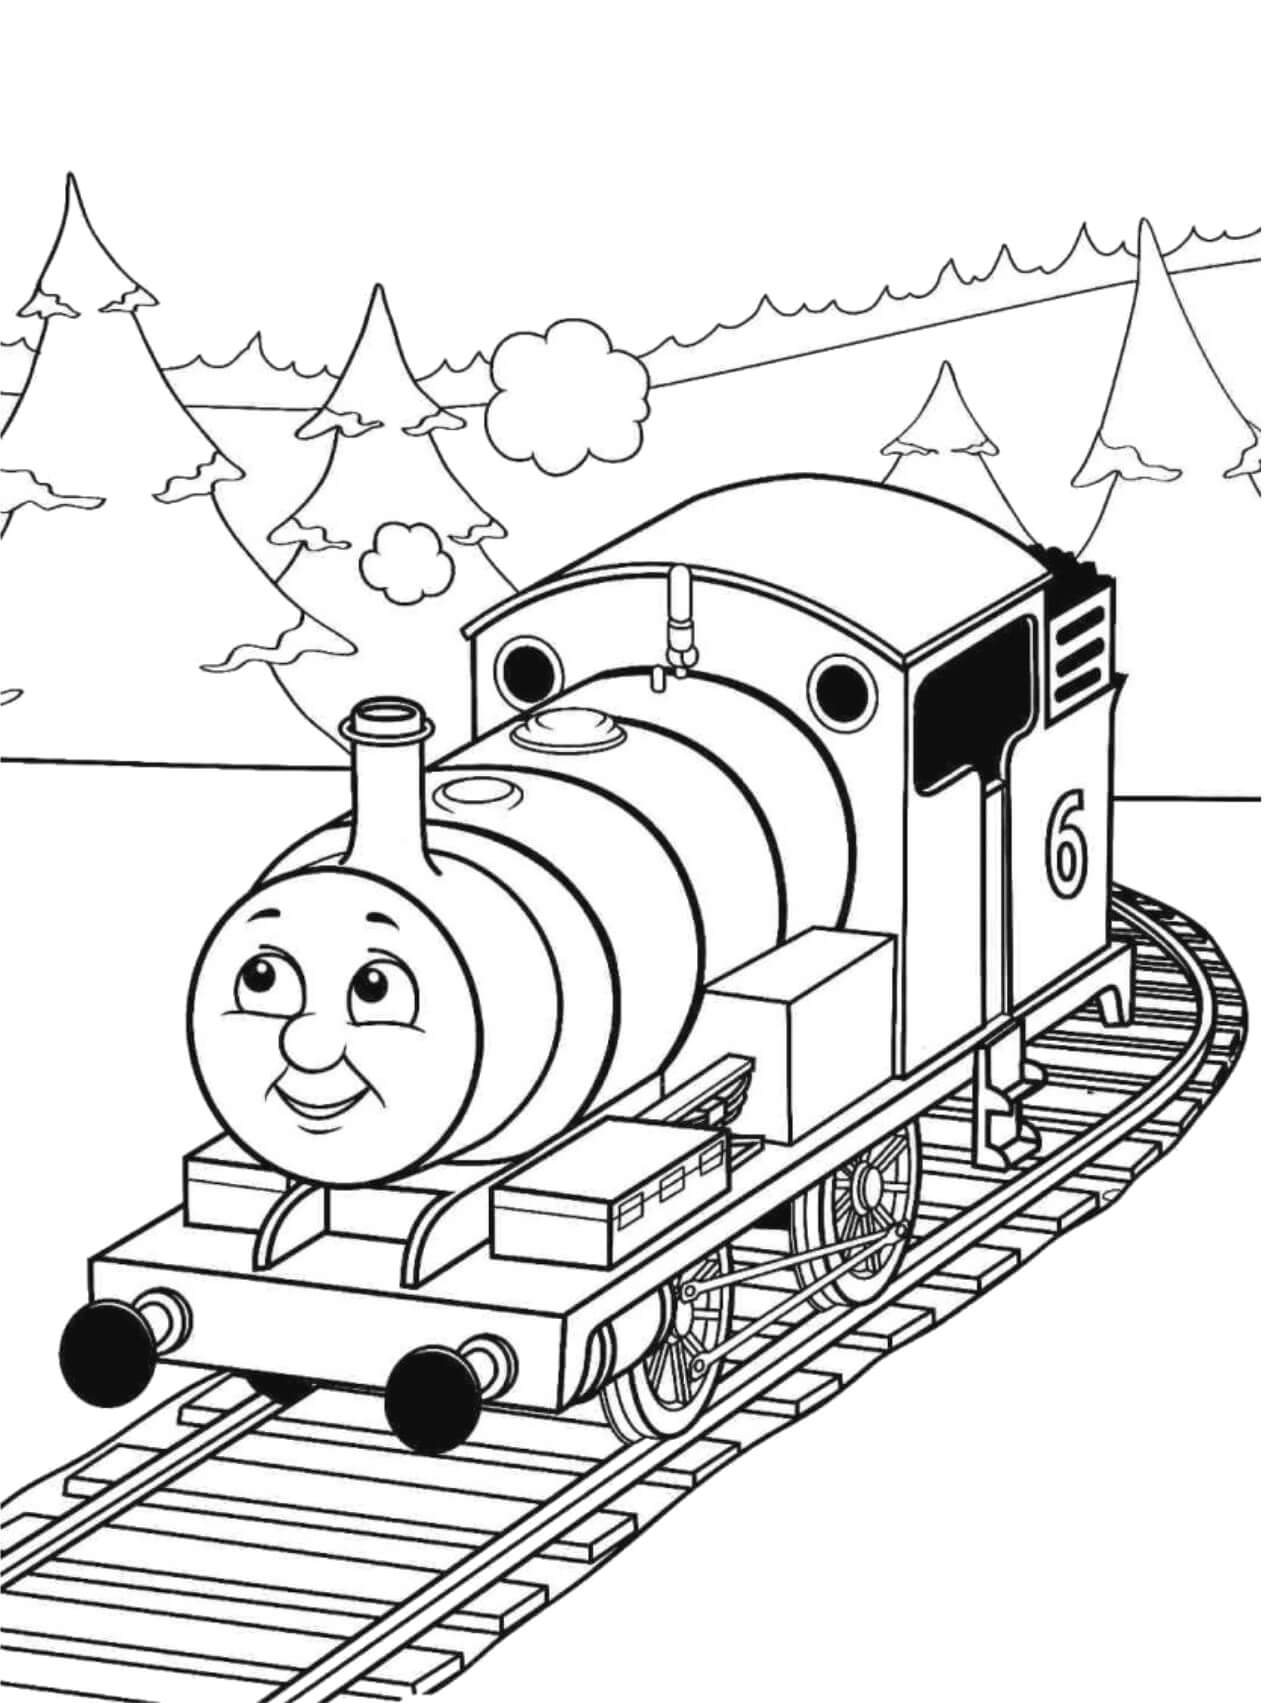 Thomas le Train 1 coloring page